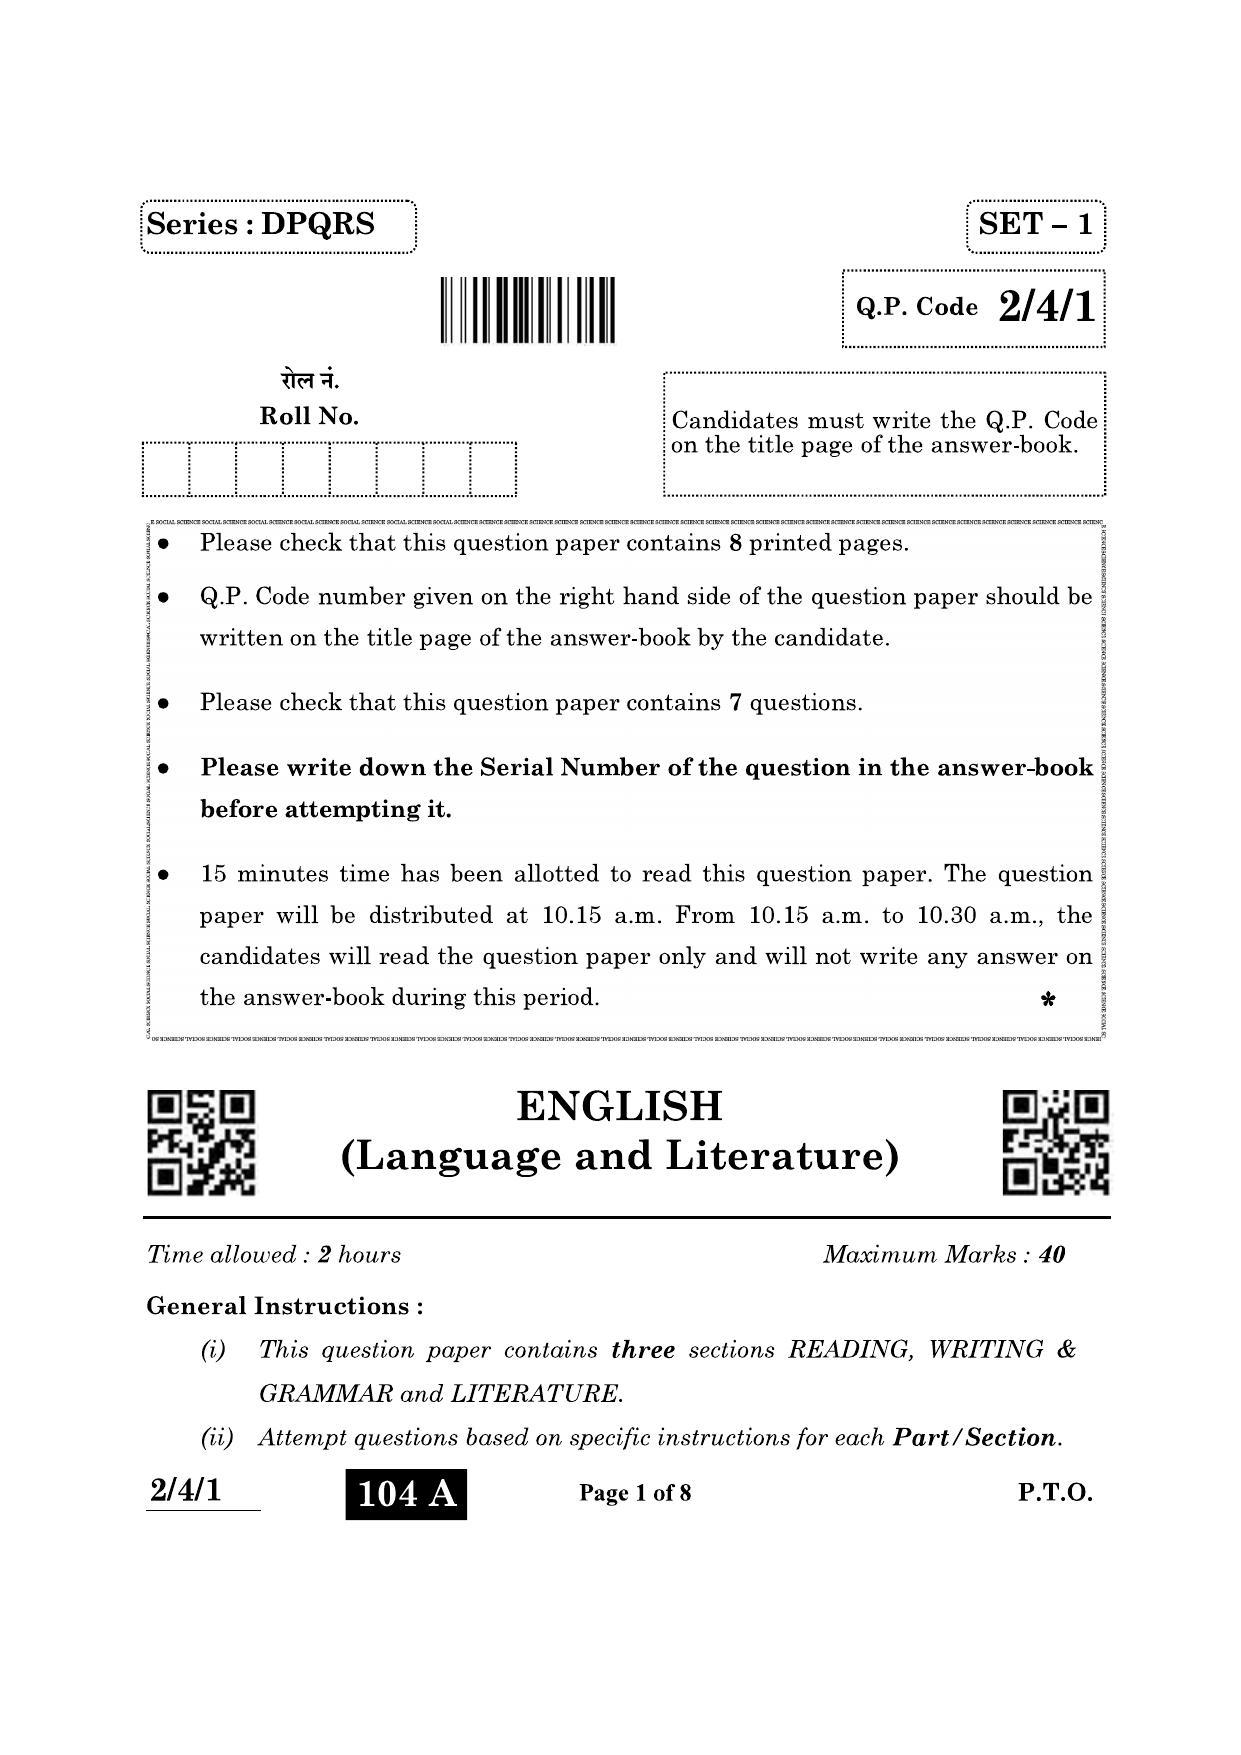 CBSE Class 10 2-4-1 (English L & L) 2022 Question Paper - Page 1